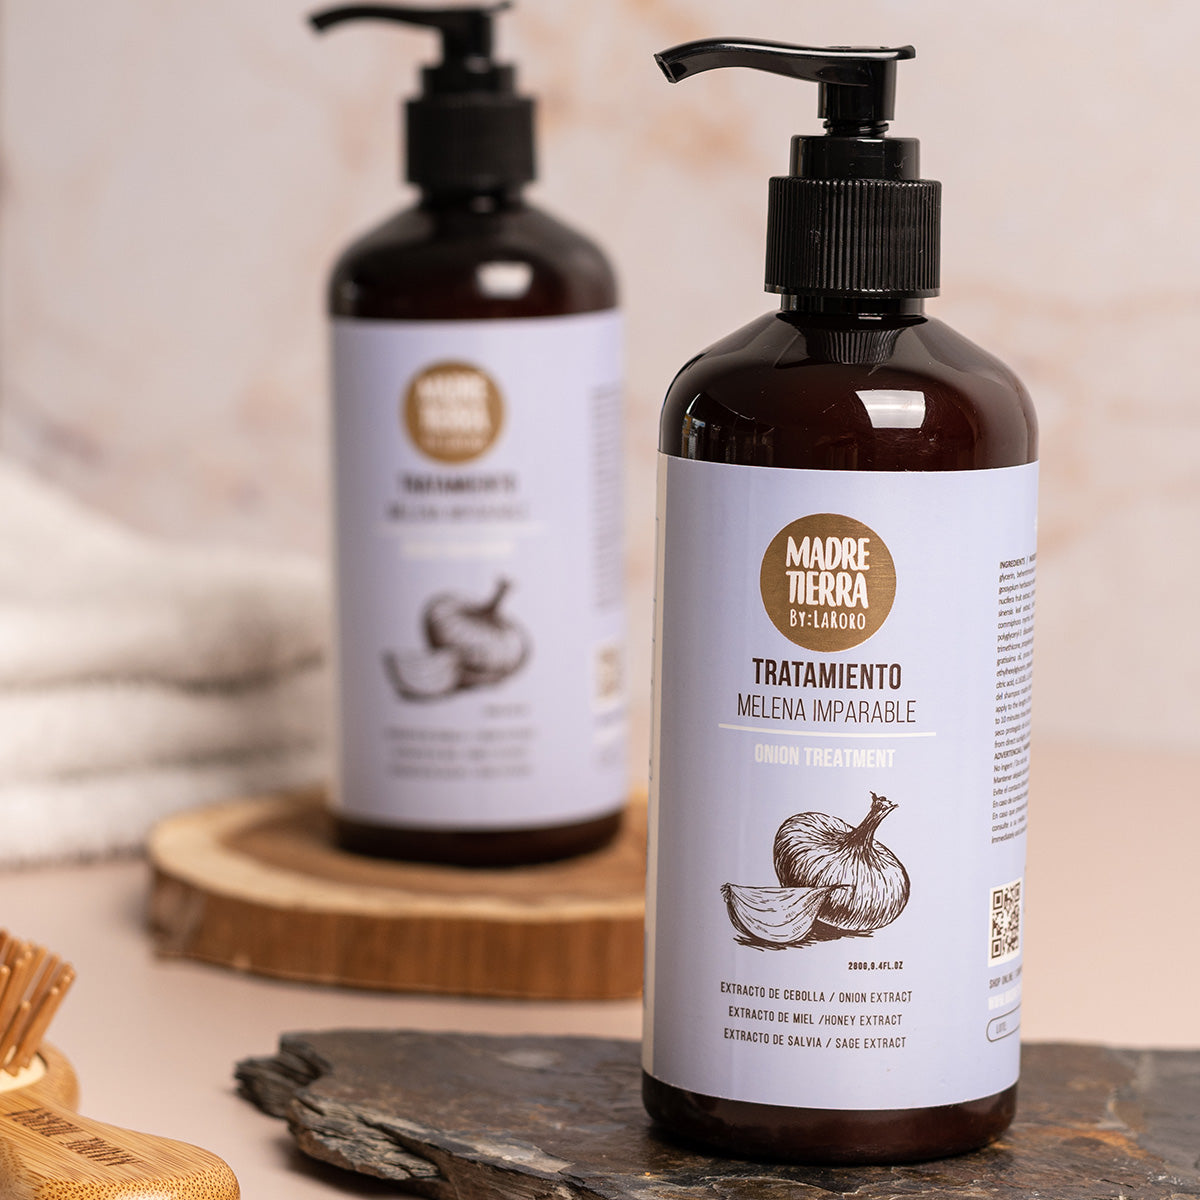 Shampoo Alhelí del Bosque + Tratamiento Melena Imparable - Madre Tierra Oficial